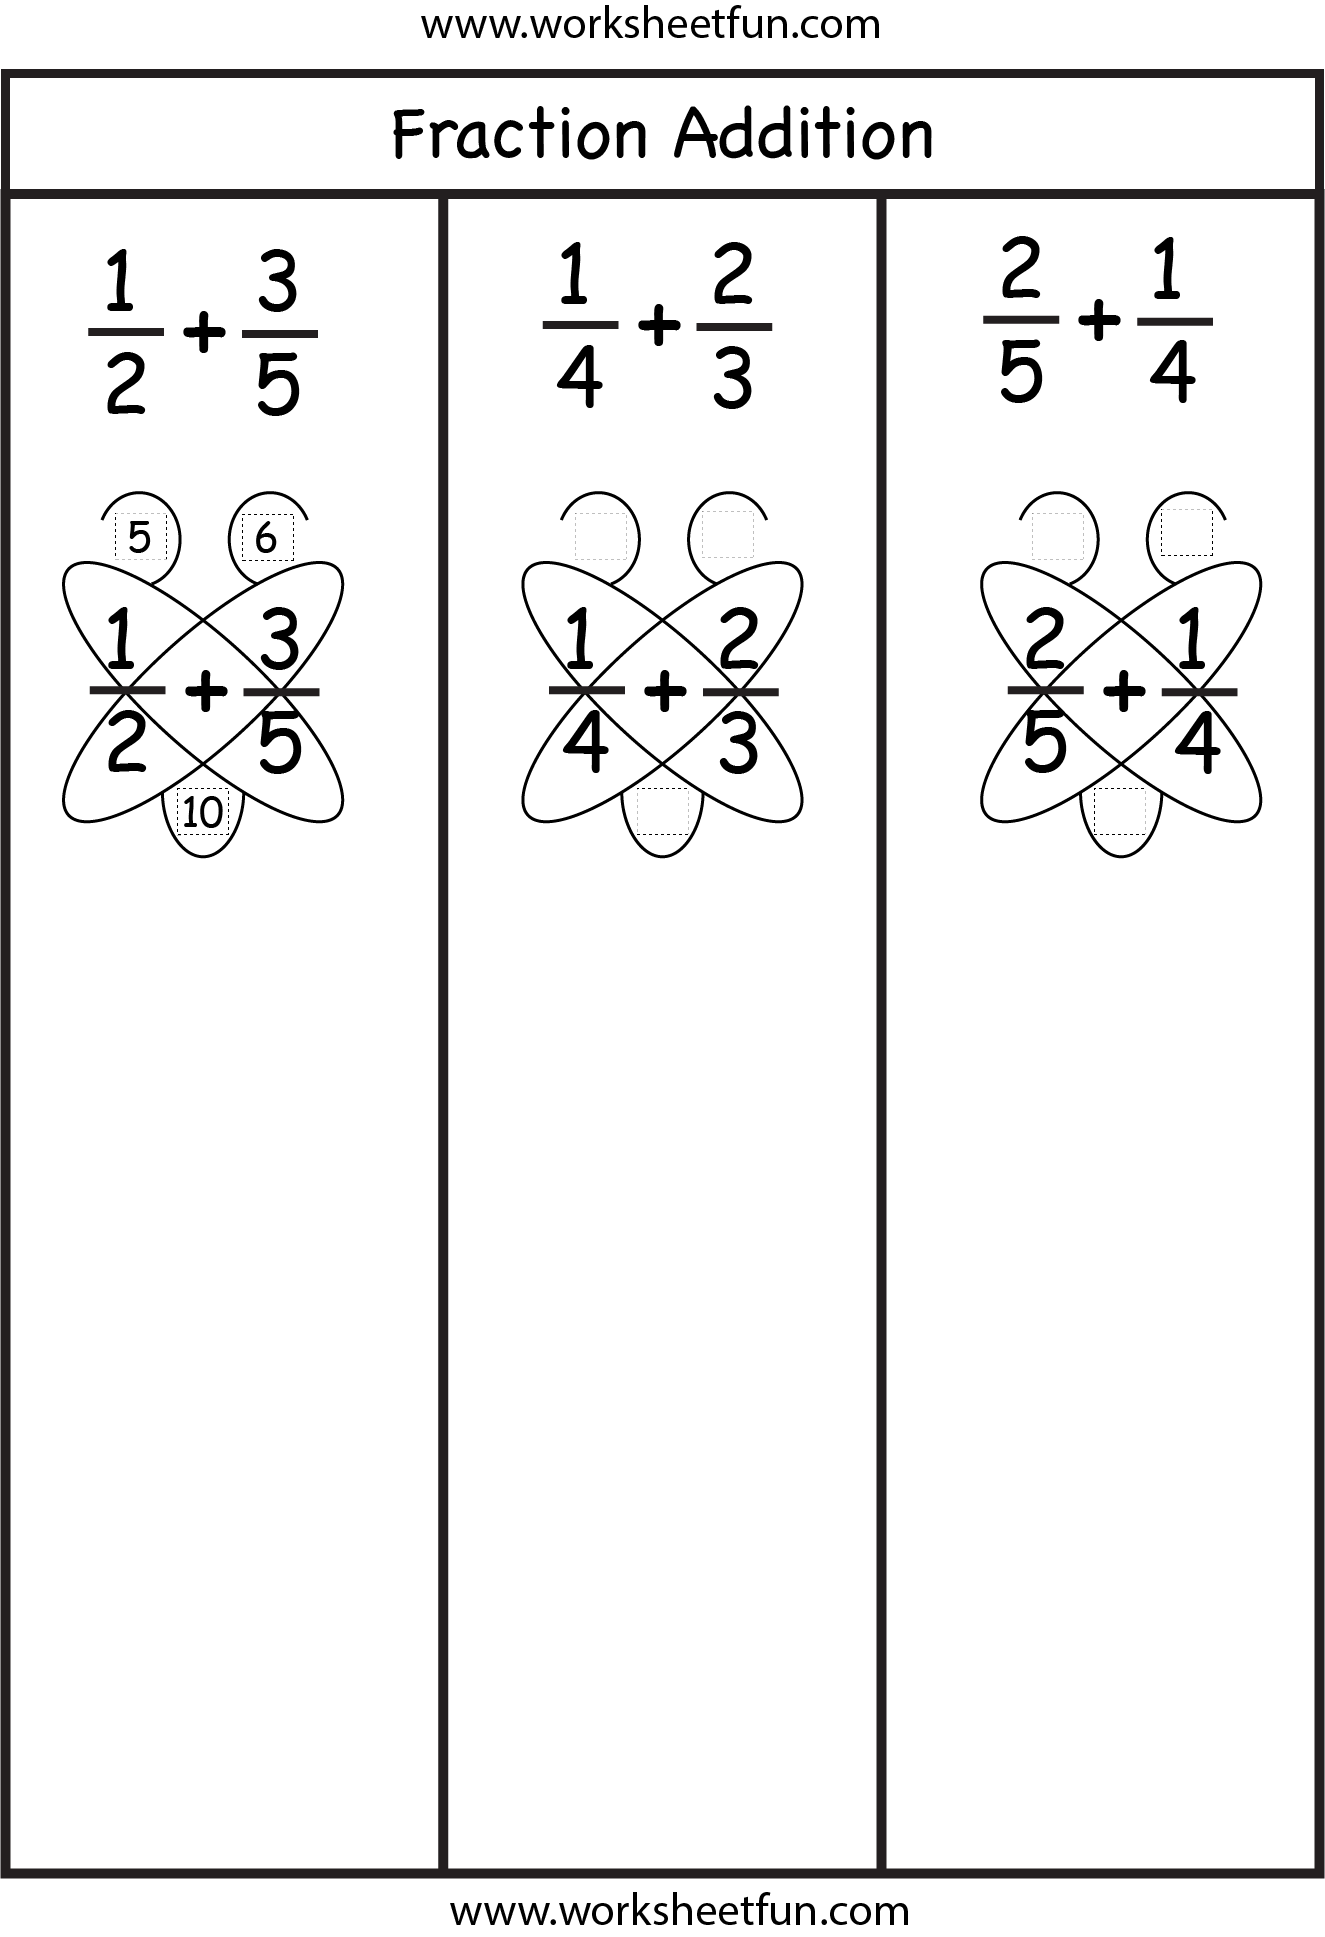 fraction-addition-butterfly-method-free-printable-worksheets-worksheetfun